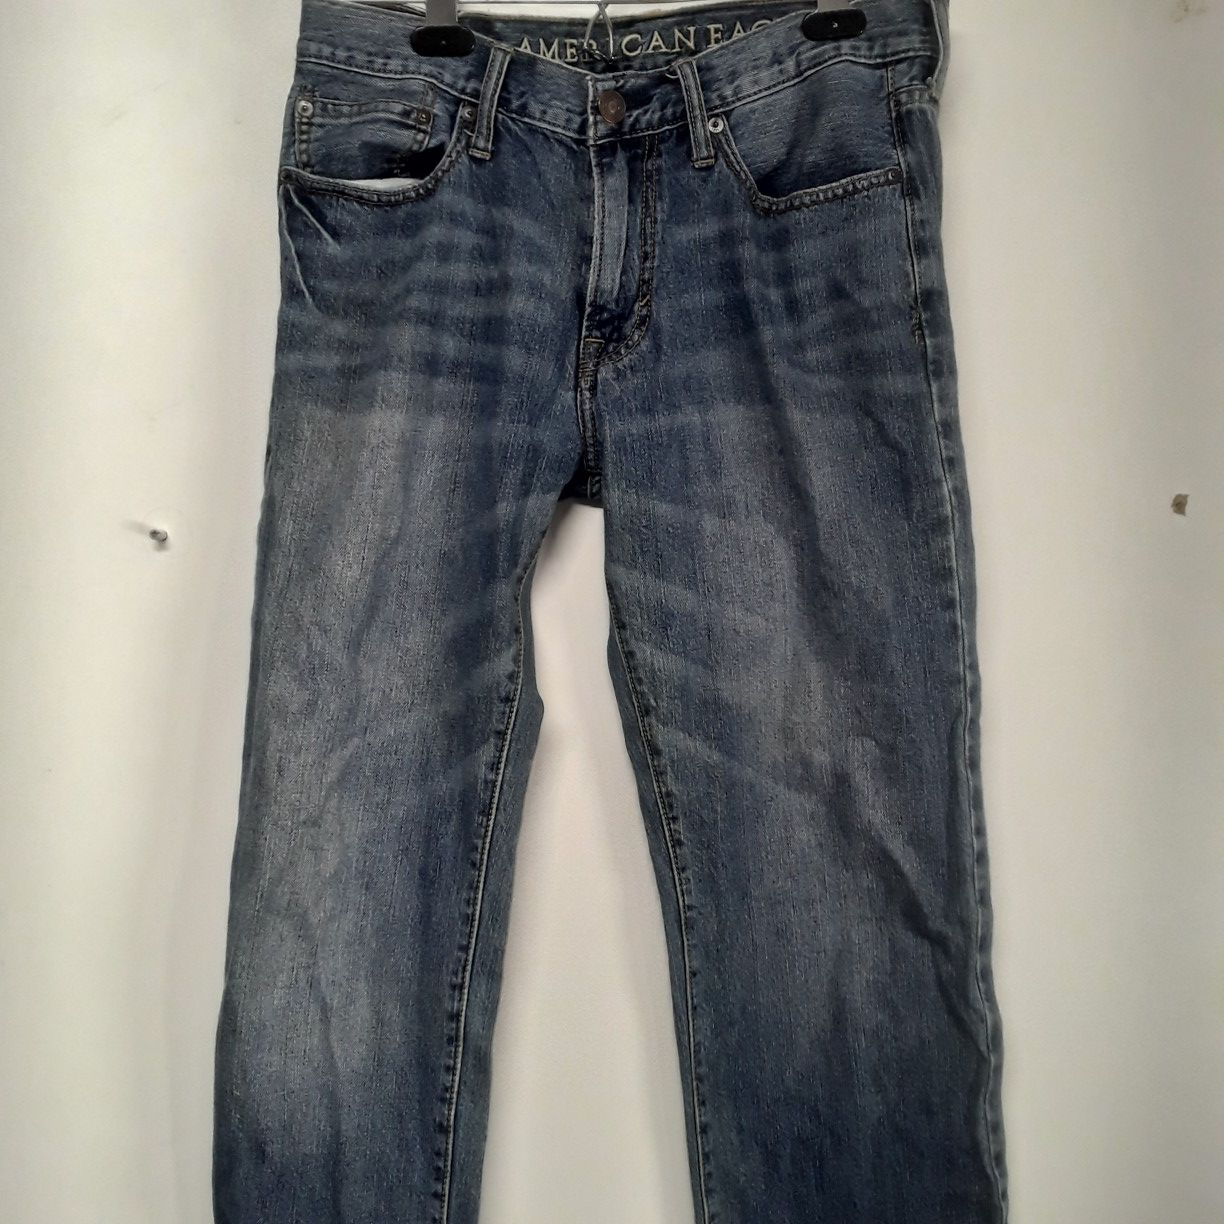 Mens american eagle jeans original straight size 30x34